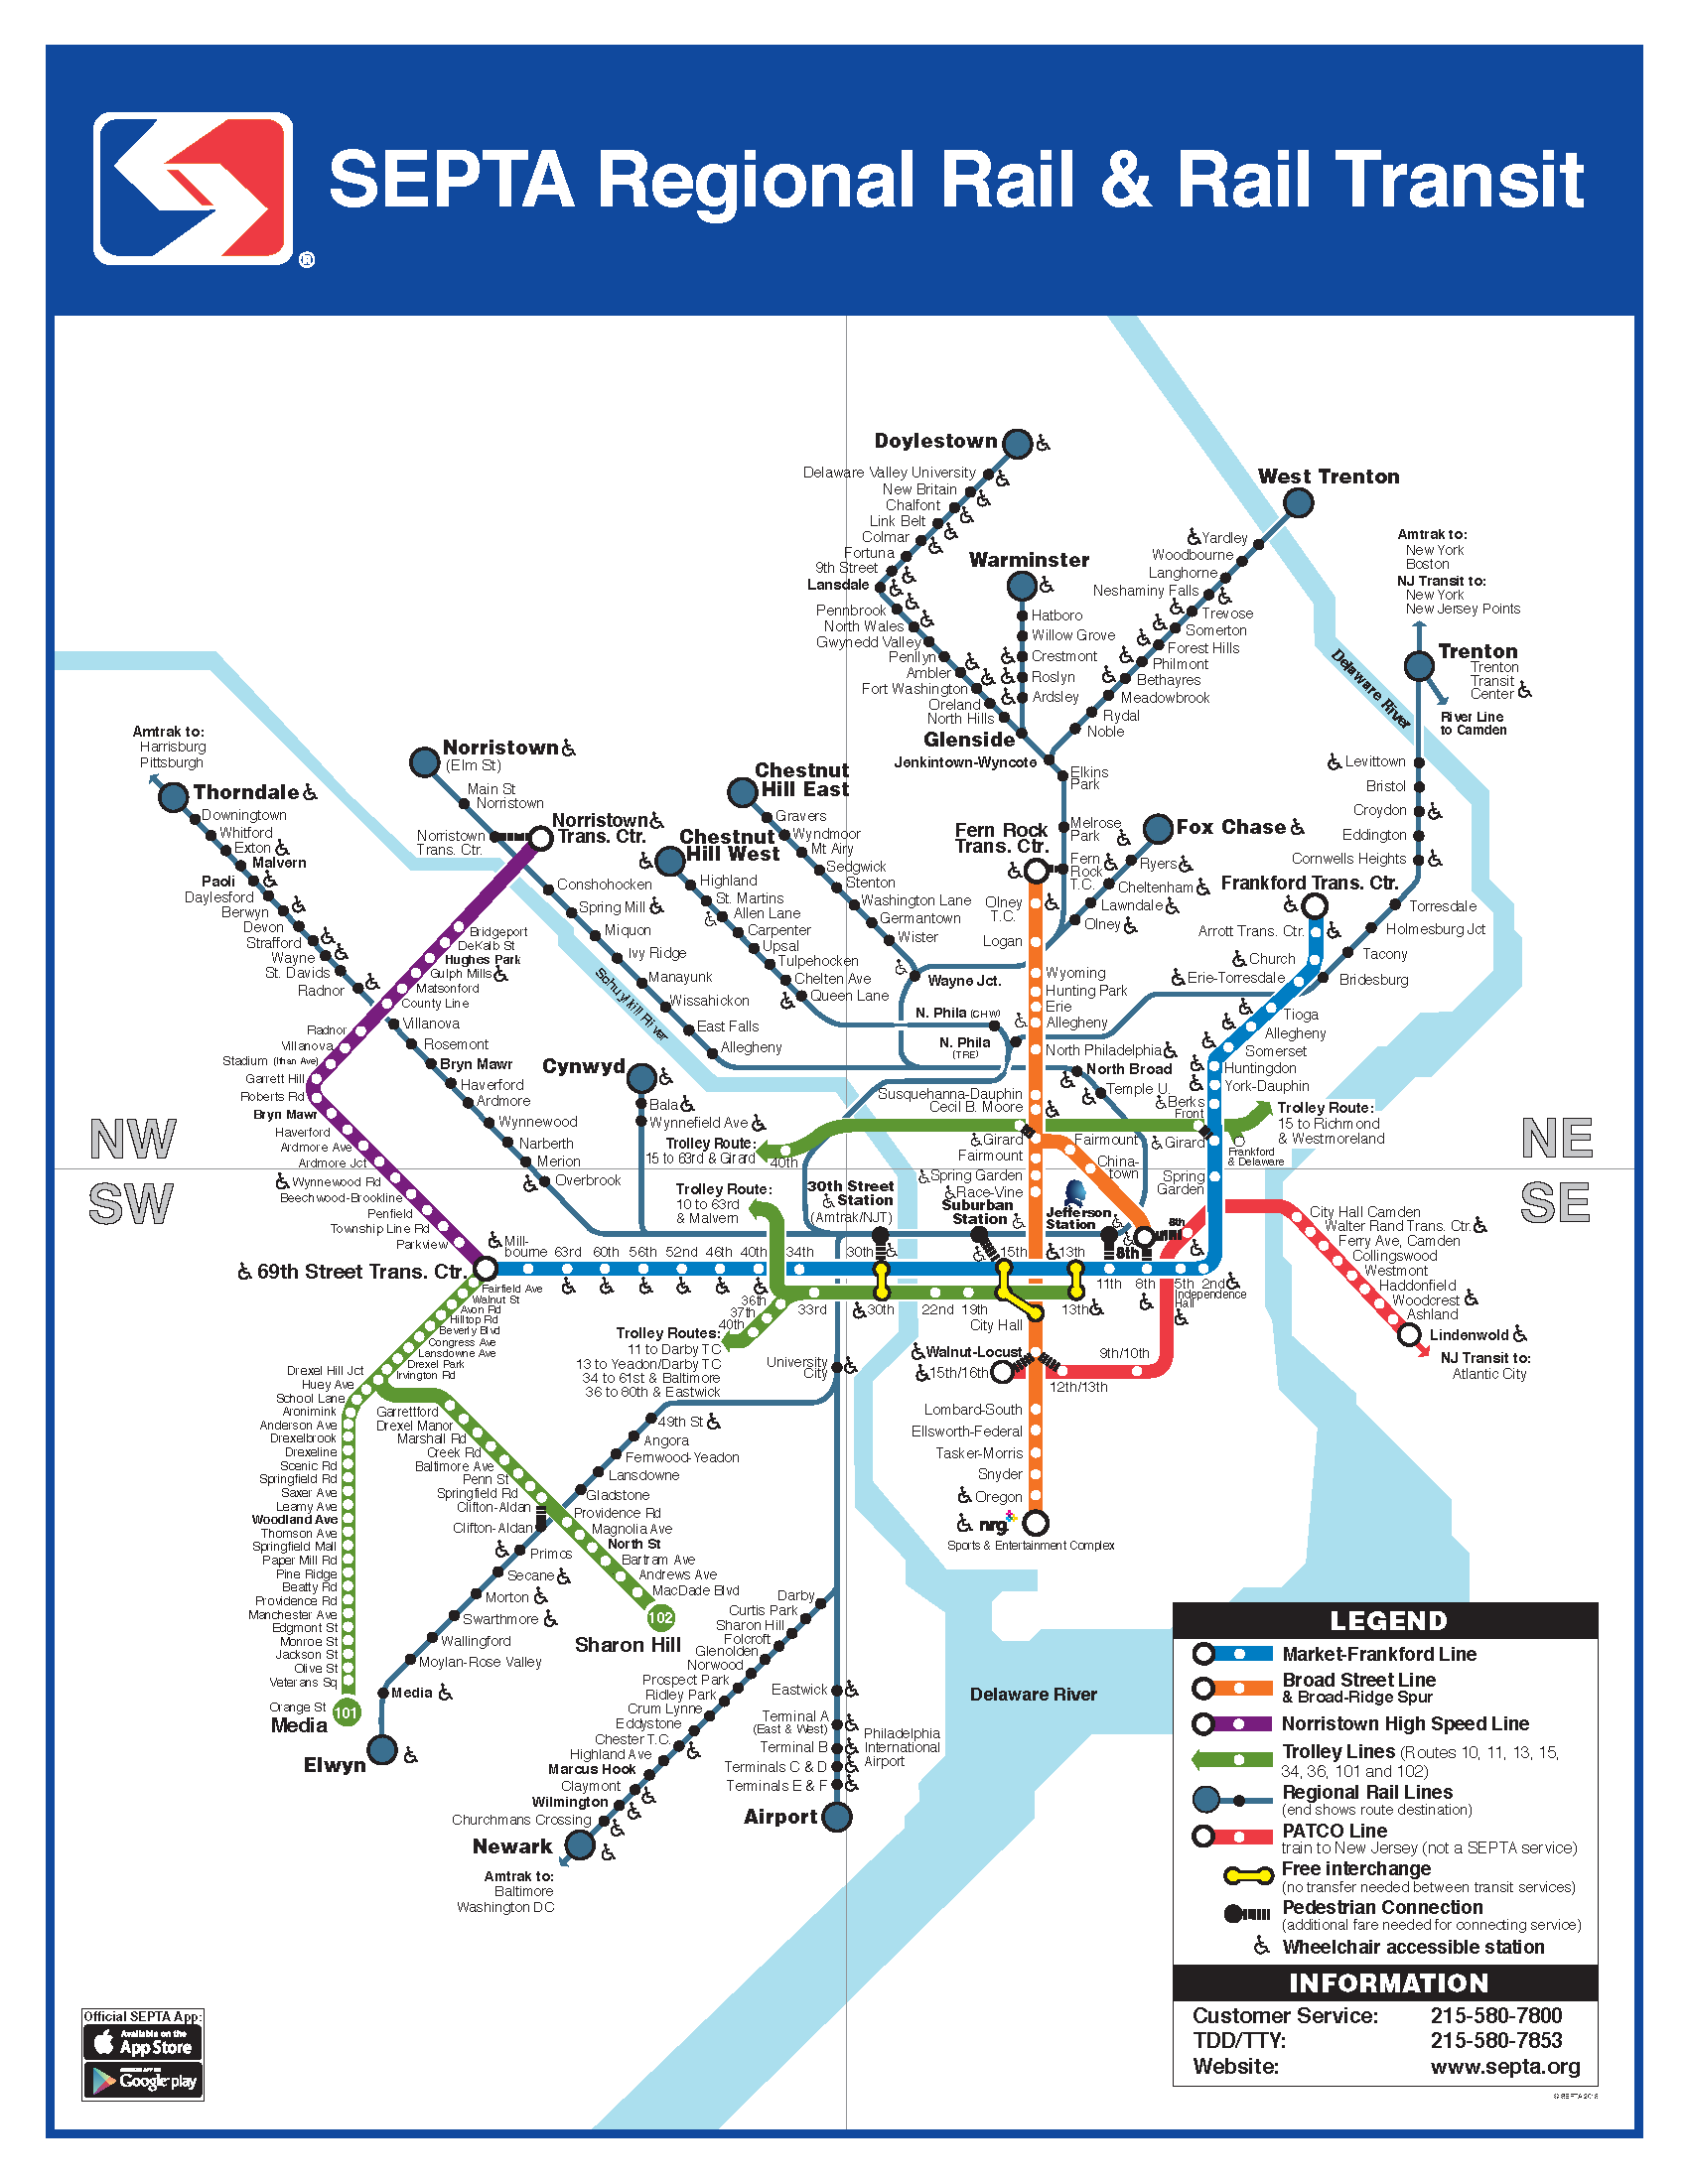 SEPTA Regional Rail & Rail Transit Map